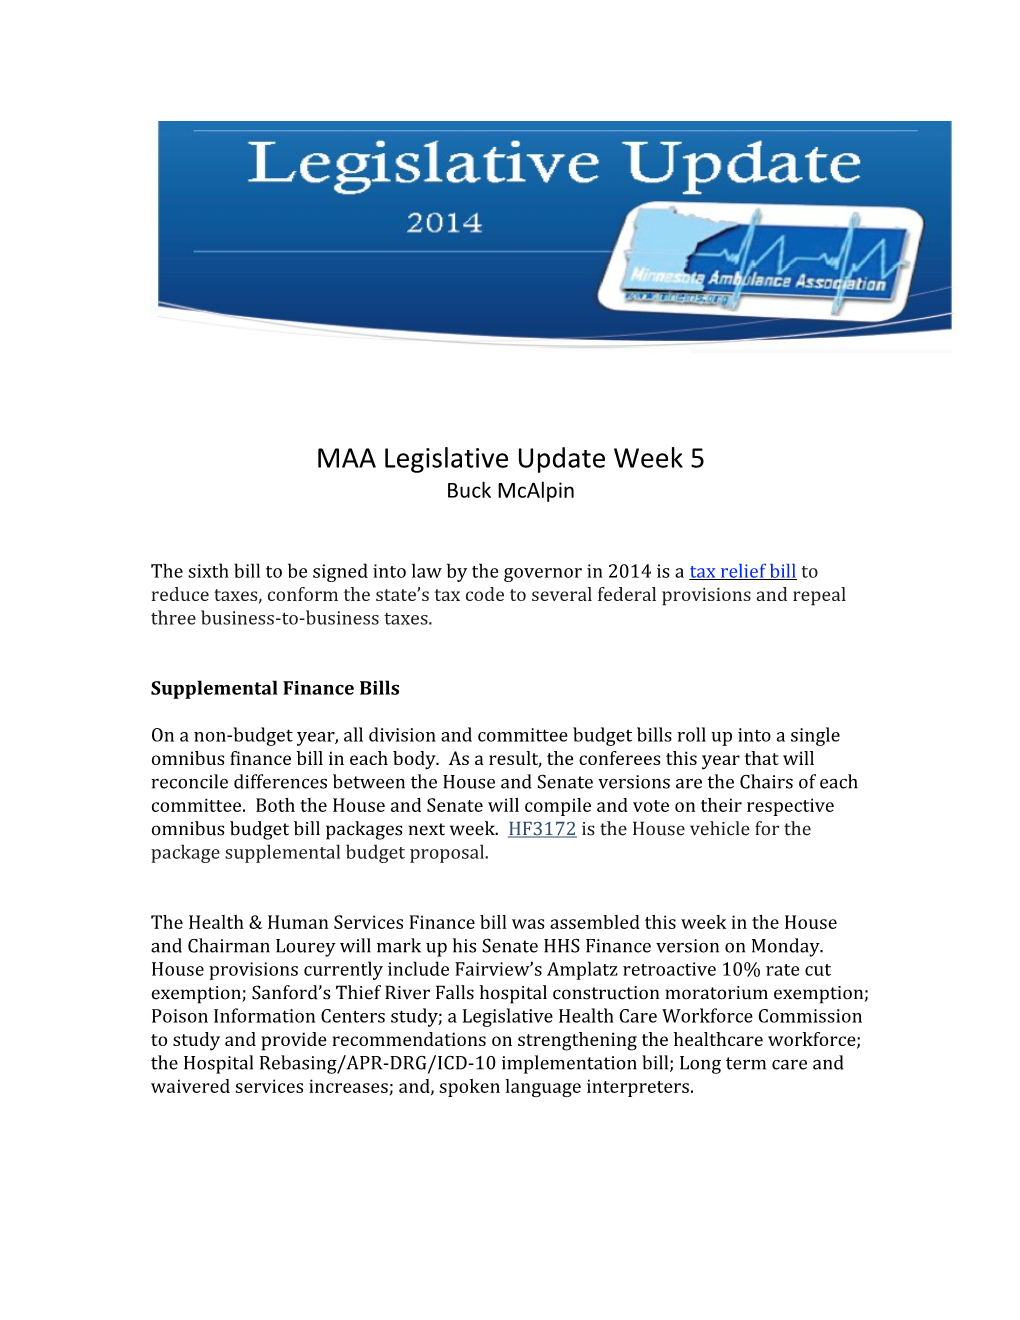 MAA Legislative Update Week 5